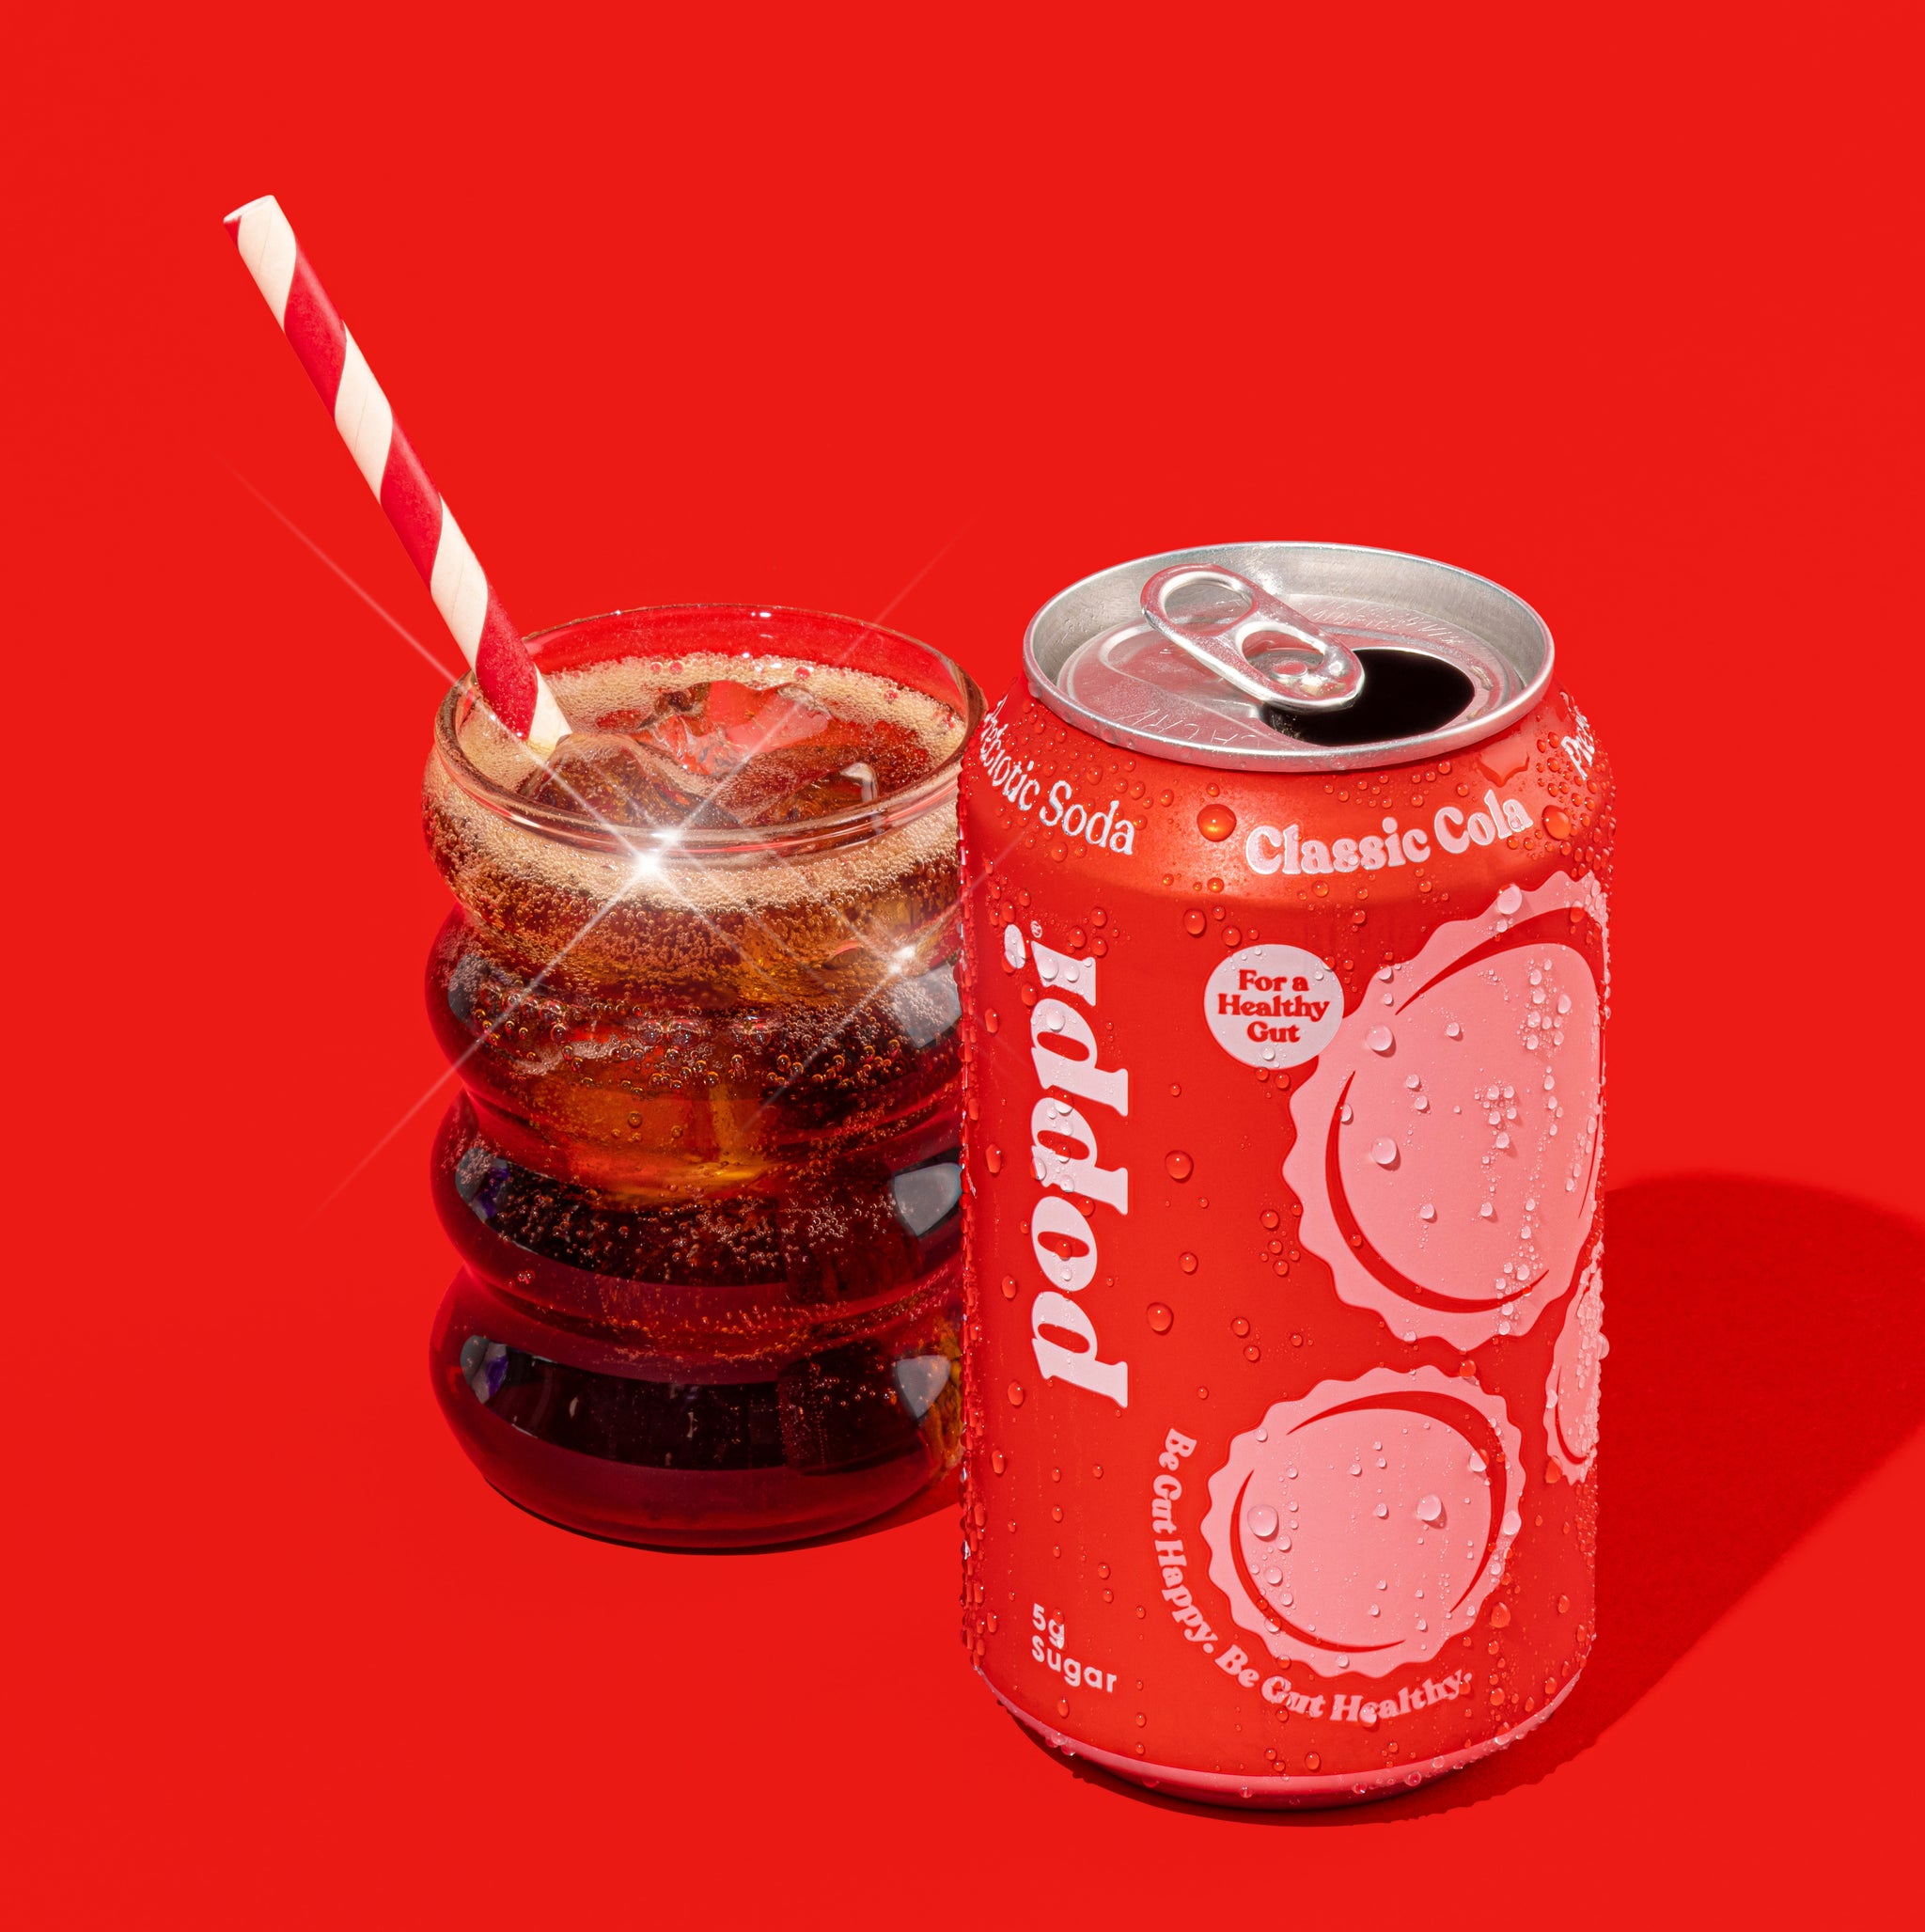 Vintage Cola Soda 12-Pack